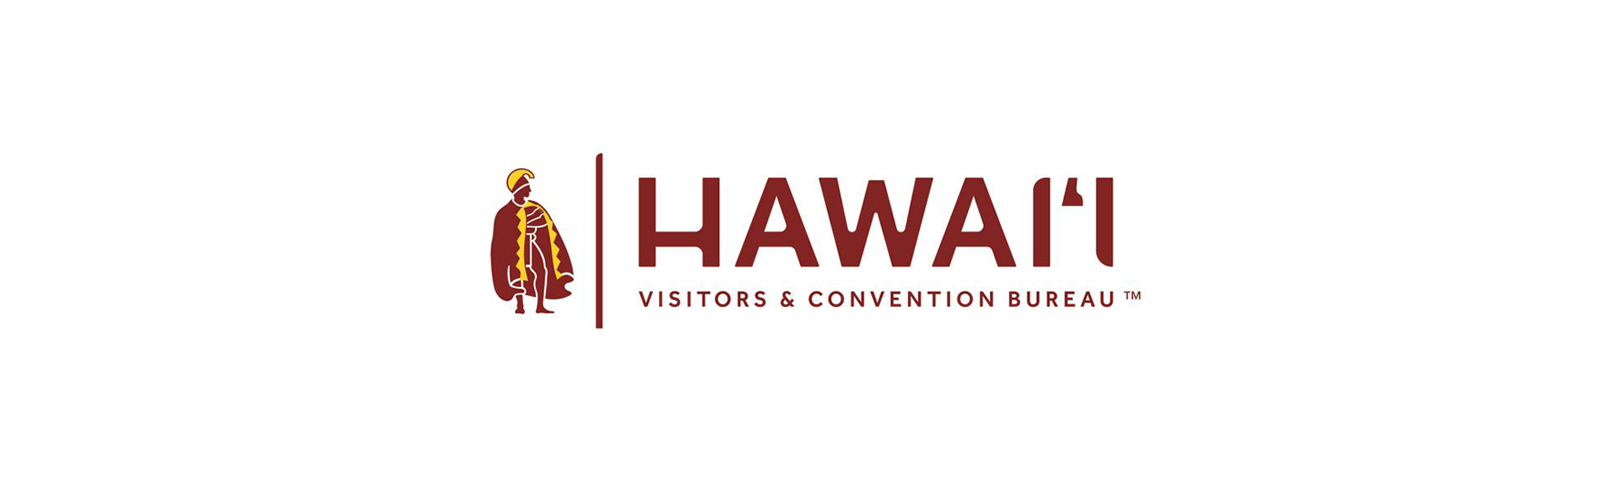 Hawaii_CVB_Webinar_ABC-Site_Header_Placeholder_1600x489 copy